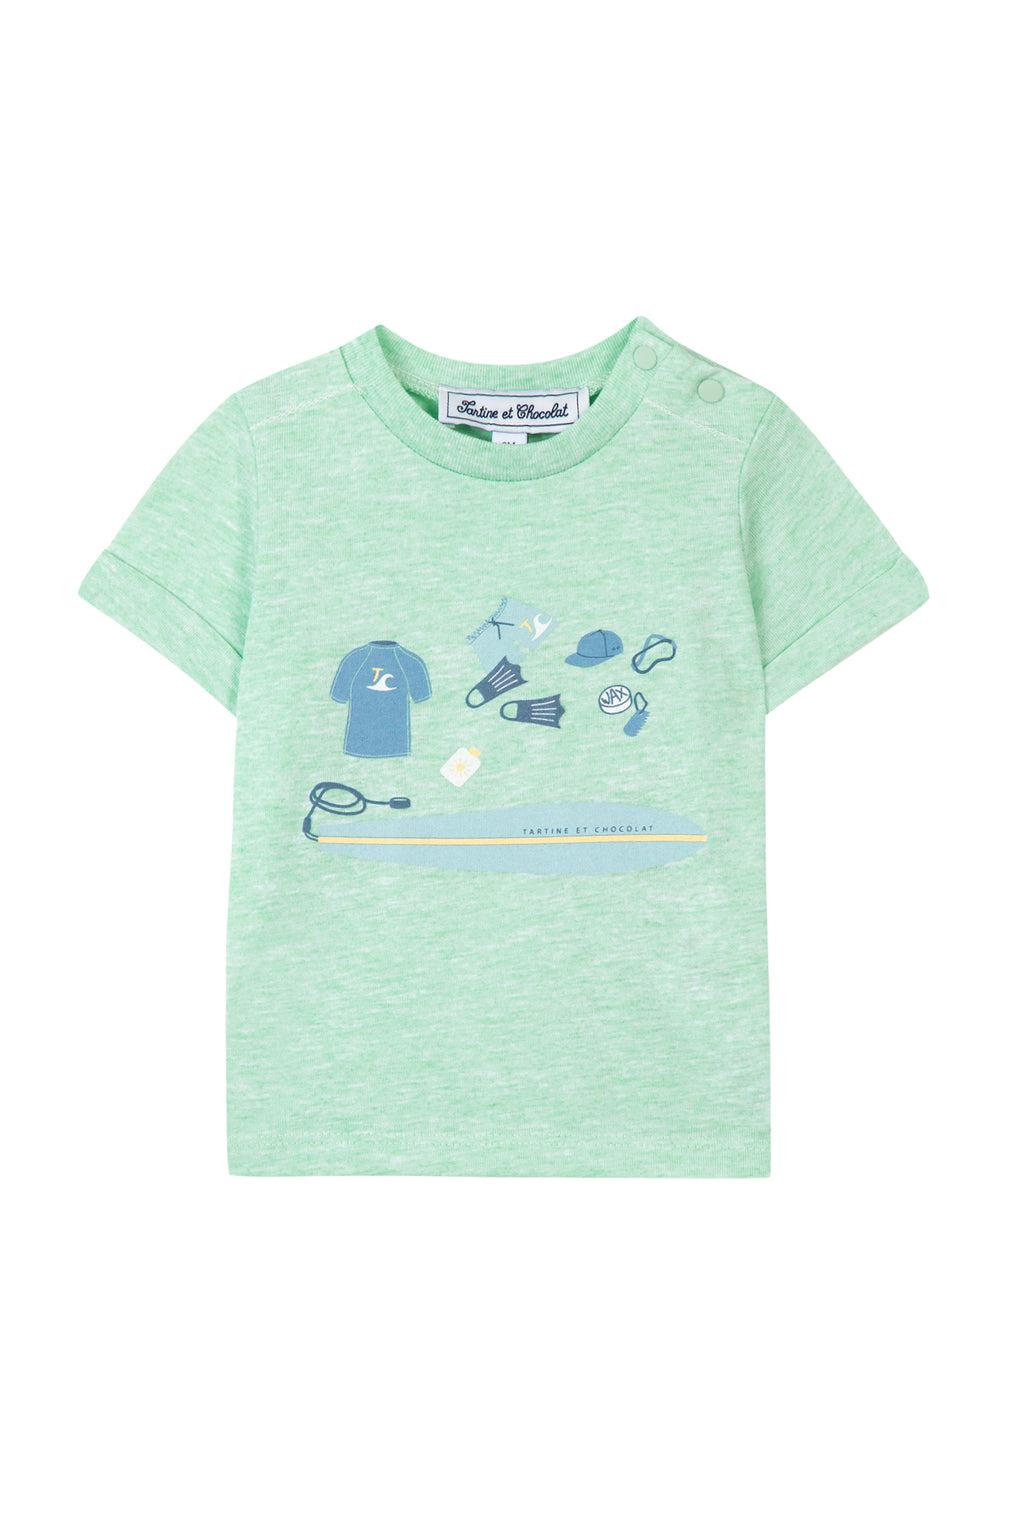 T -Shirt -  Grün Illustration Surfer